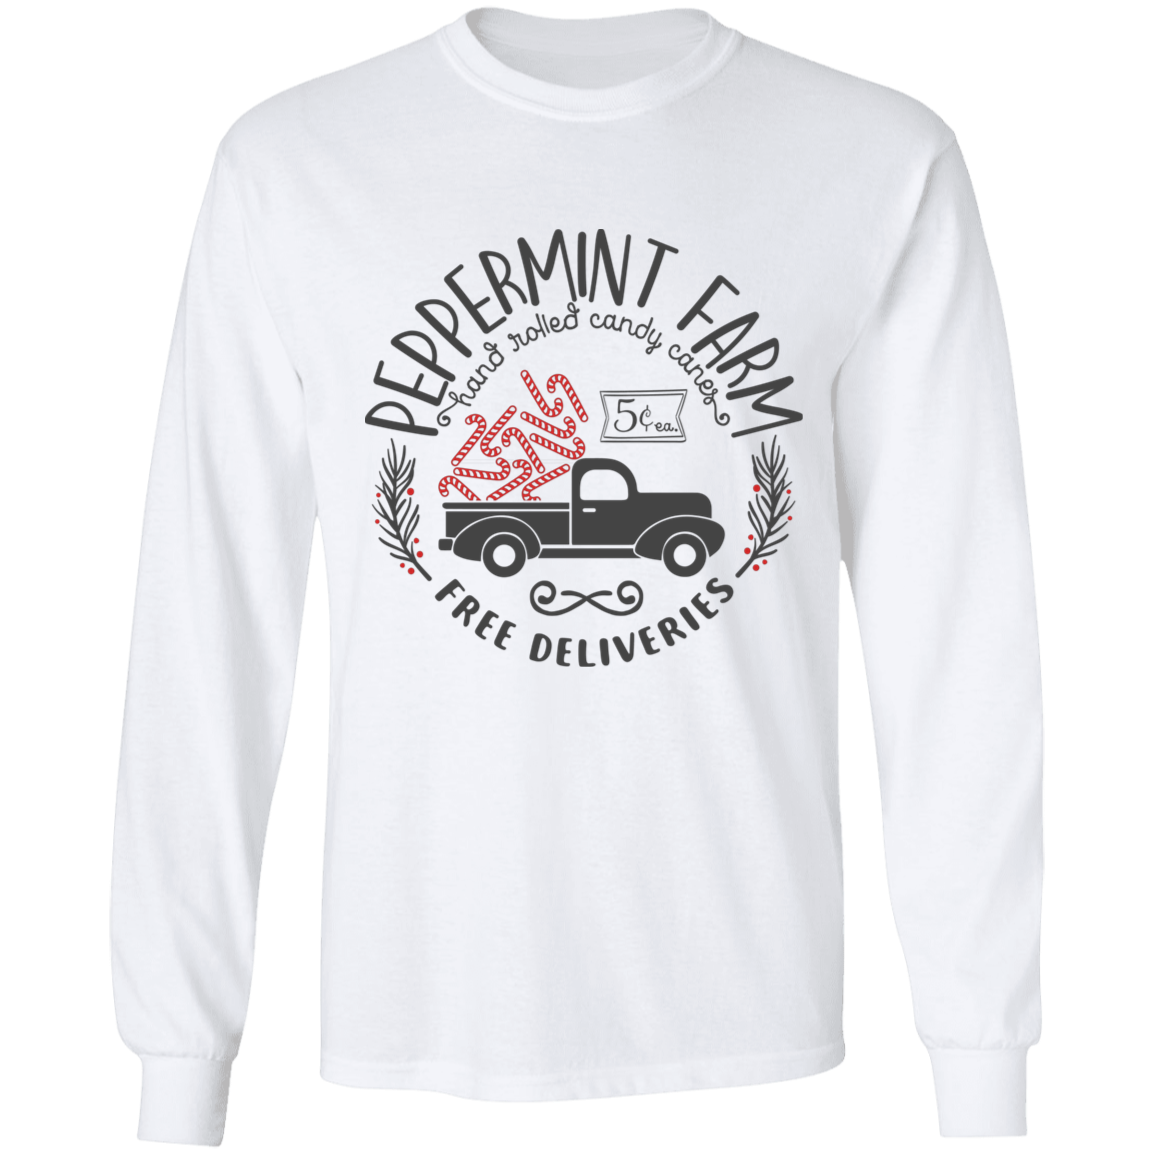 Peppermint farms long sleeve T-shirt